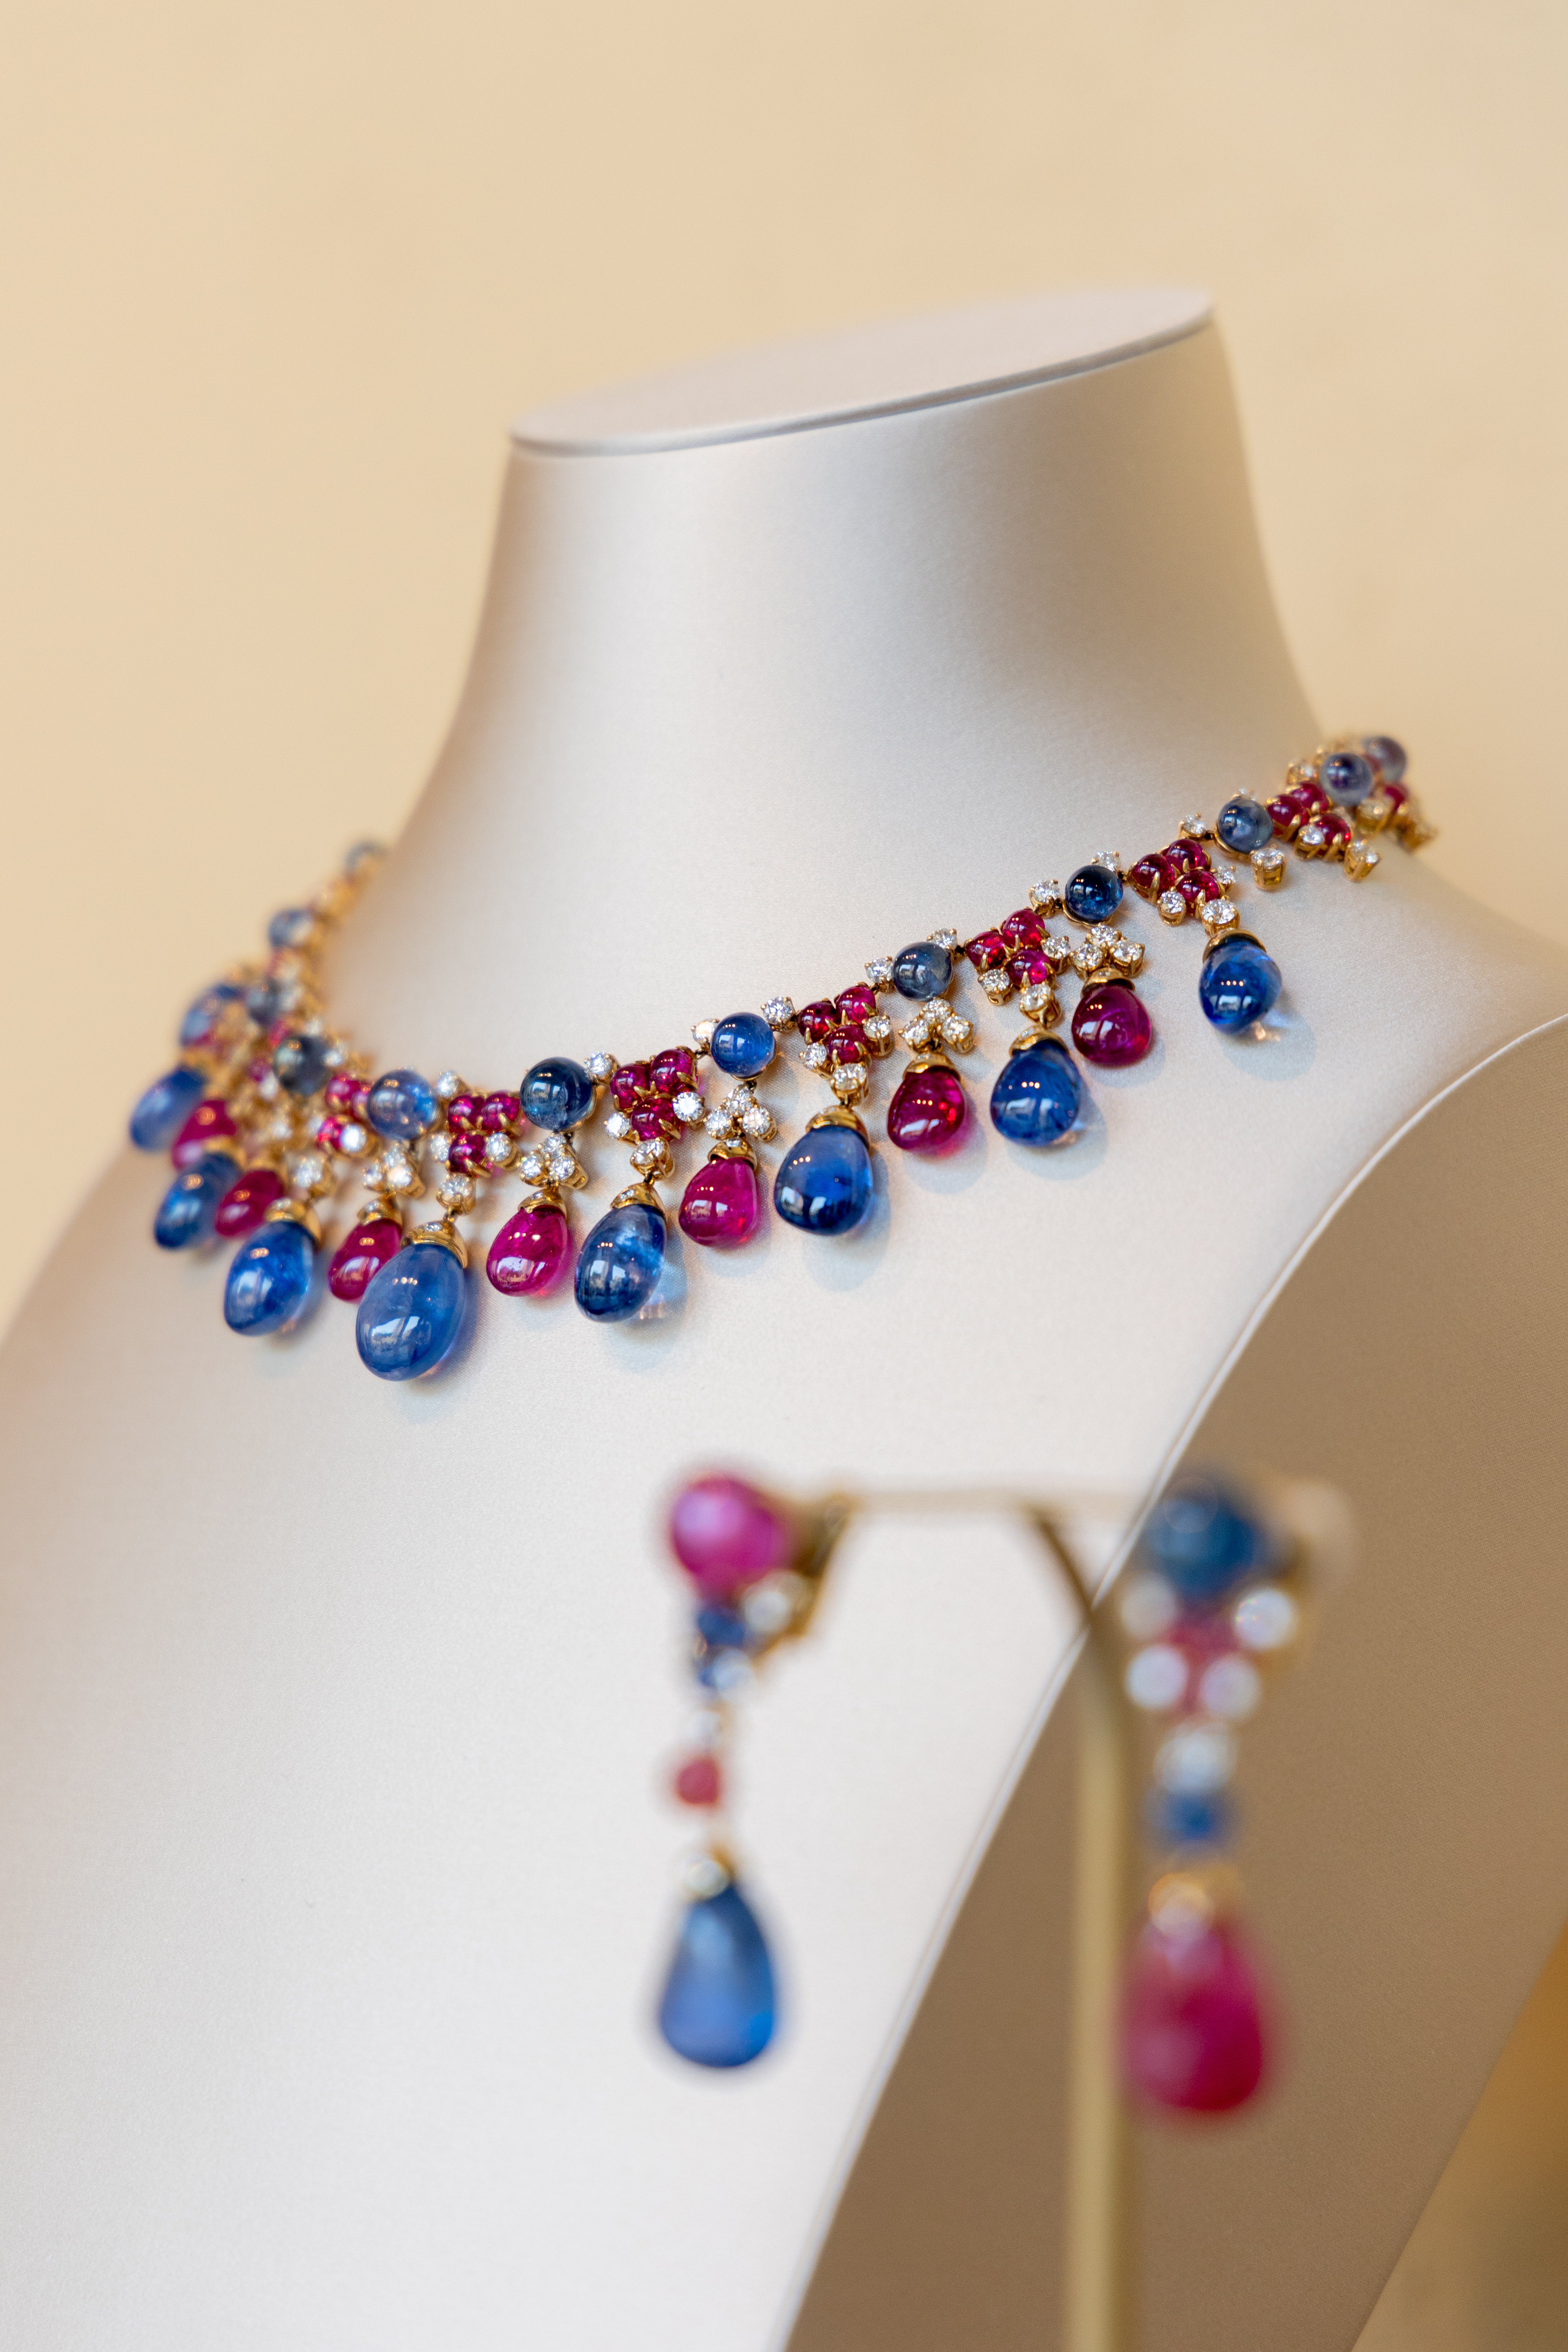 Historic Bulgari jewels shown alongside traditional Emirati crafts in  Sharjah exhibition